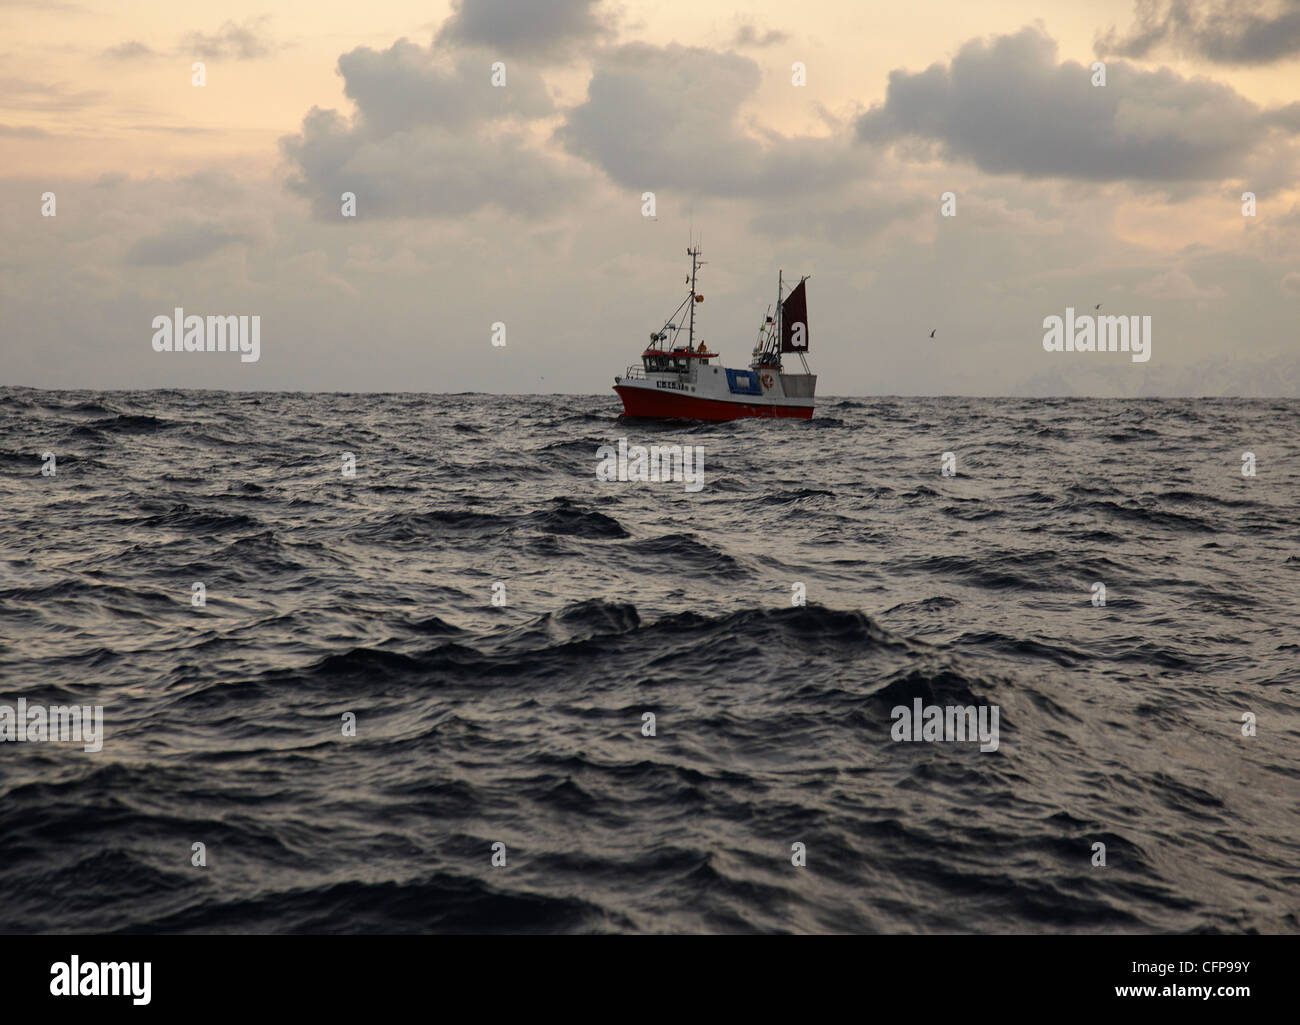 A fishing boat in the field in the Atlantic ocean Stock Photo